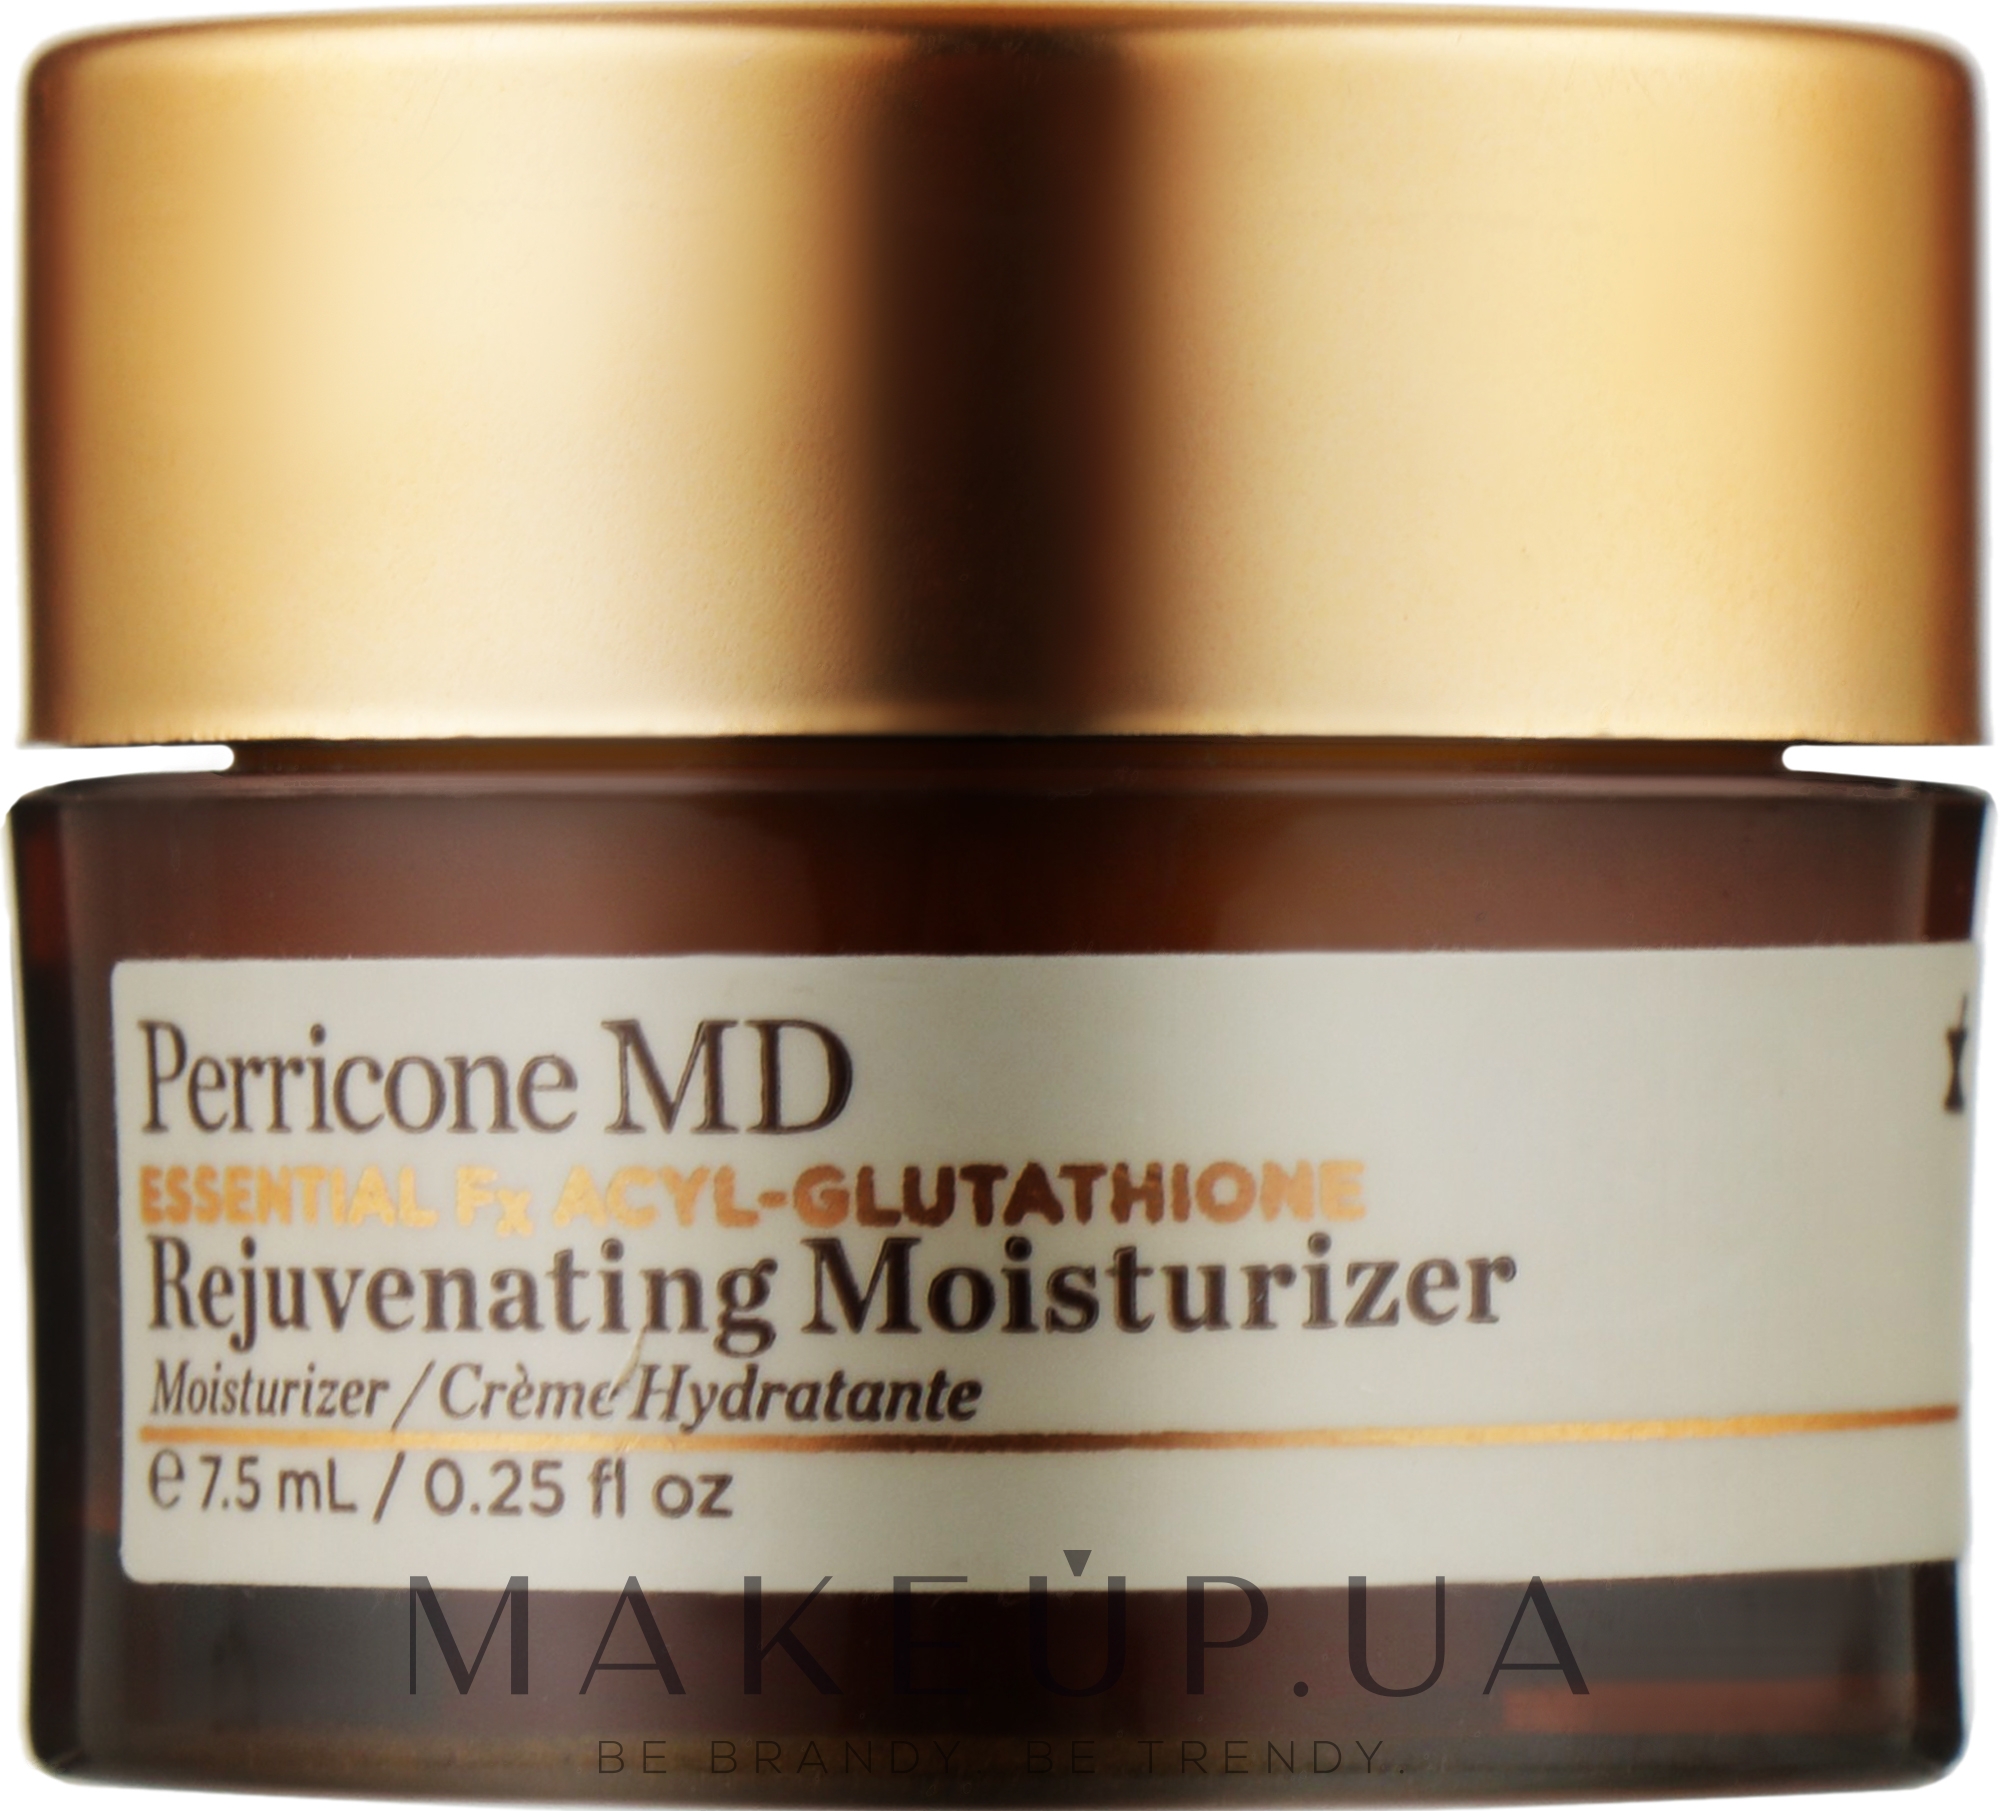 Увлажняющий крем для лица с ацил-глутатионом - Perricone MD Essential Fx Acyl-Glutathione Rejuvenating Moisturizer (мини) — фото 7.5ml